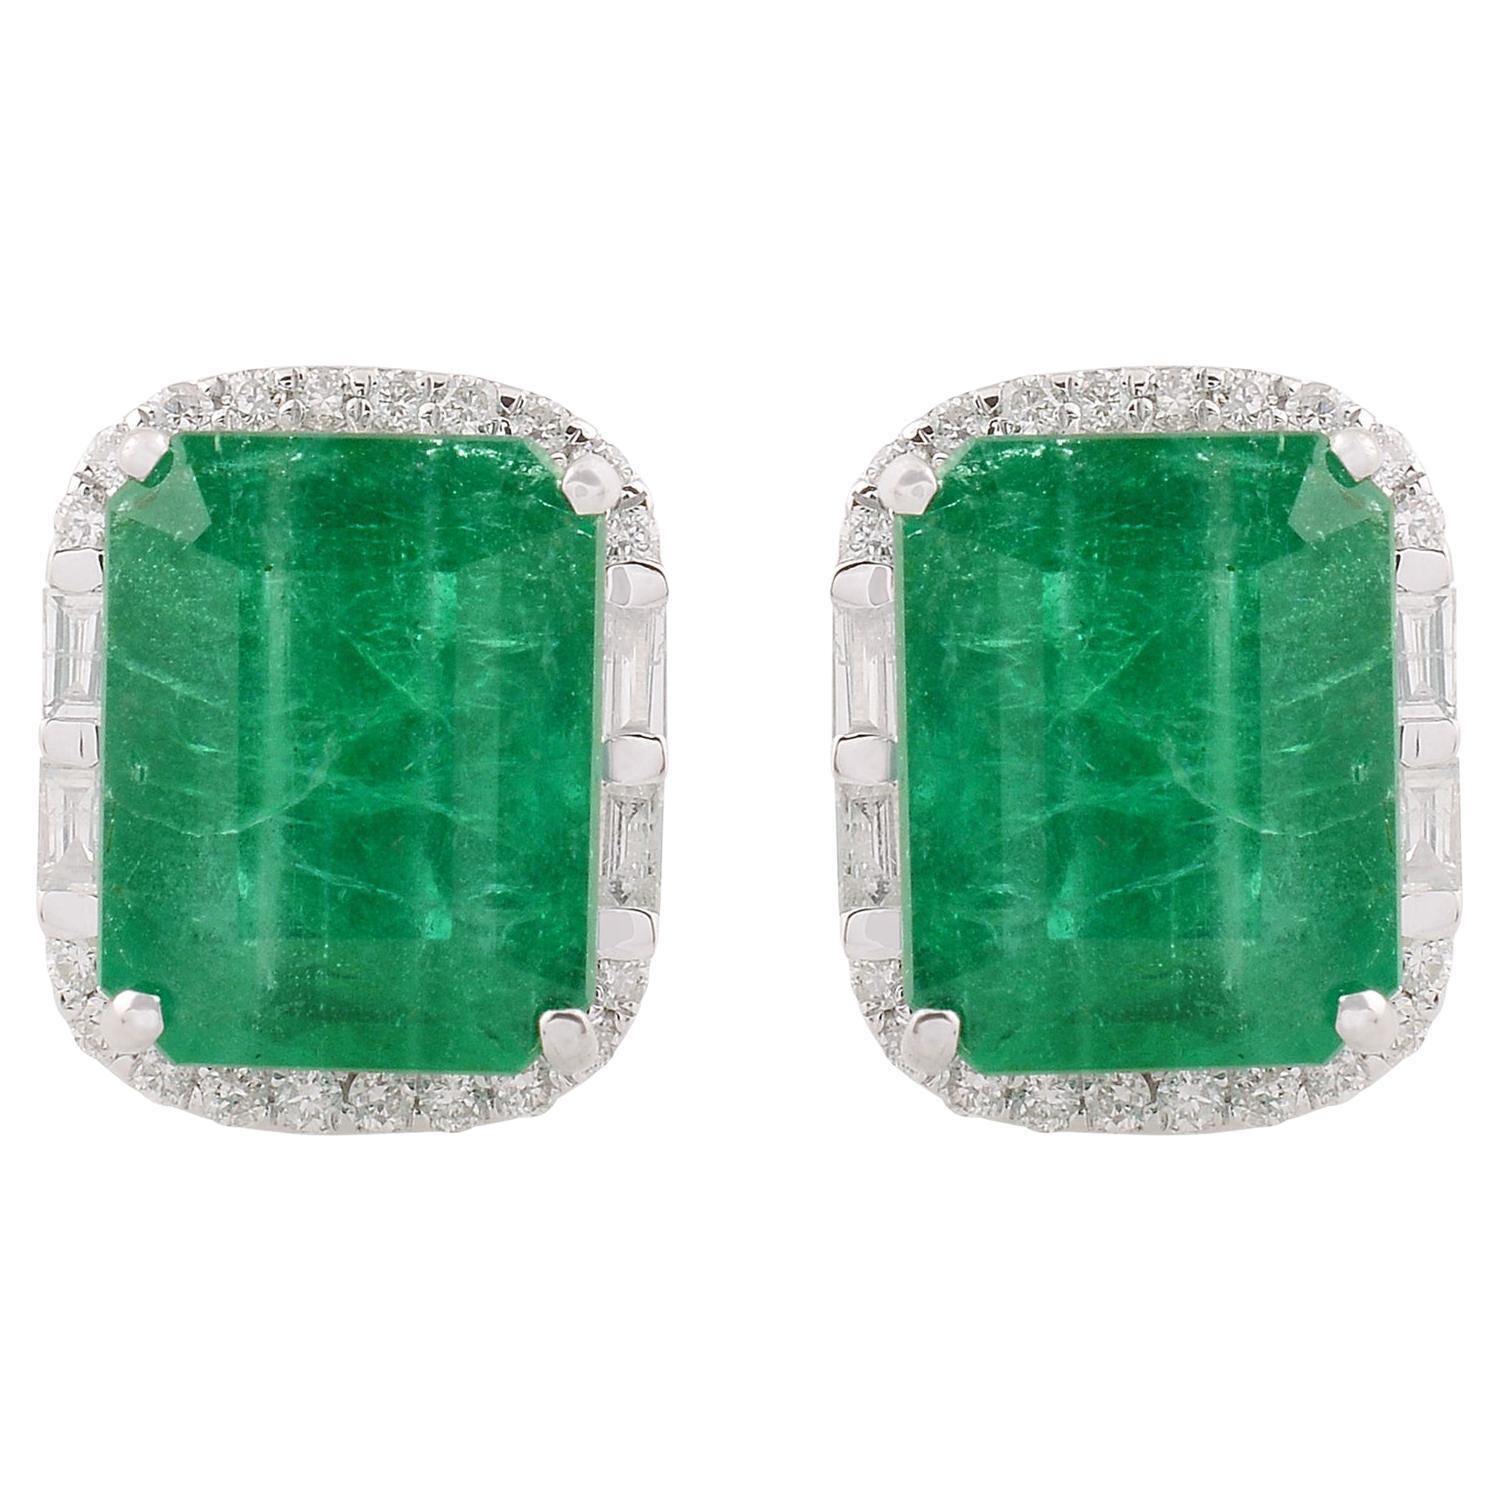 Zambian Emerald Earrings SI Clarity HI Color Diamond 18k White Gold Fine Jewelry